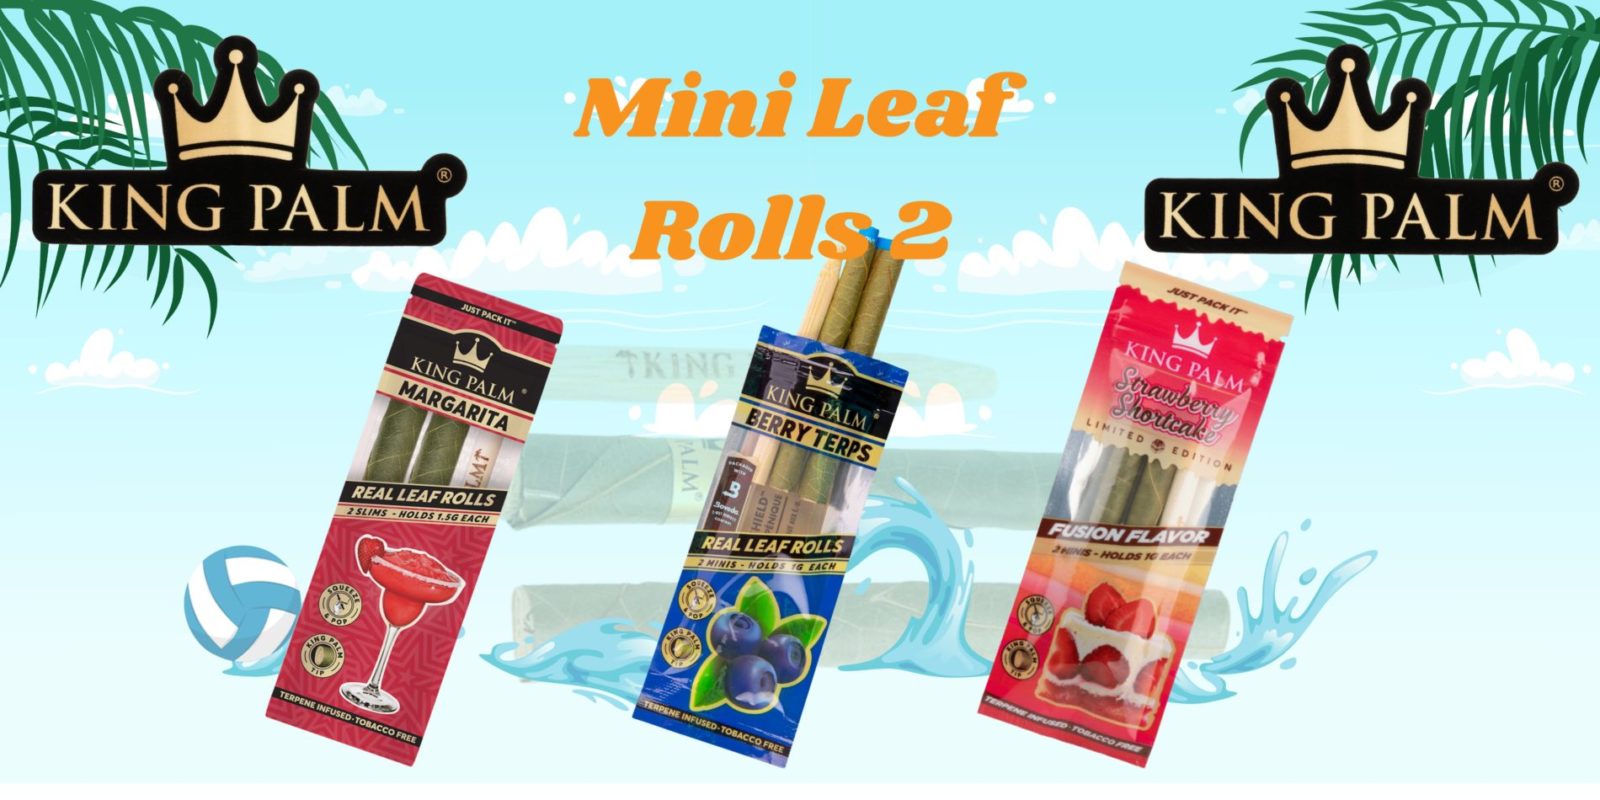 King Palm Mini Leaf Rolls 2 – Margarita 420 SUPPLIES - XMANIA Ireland 11